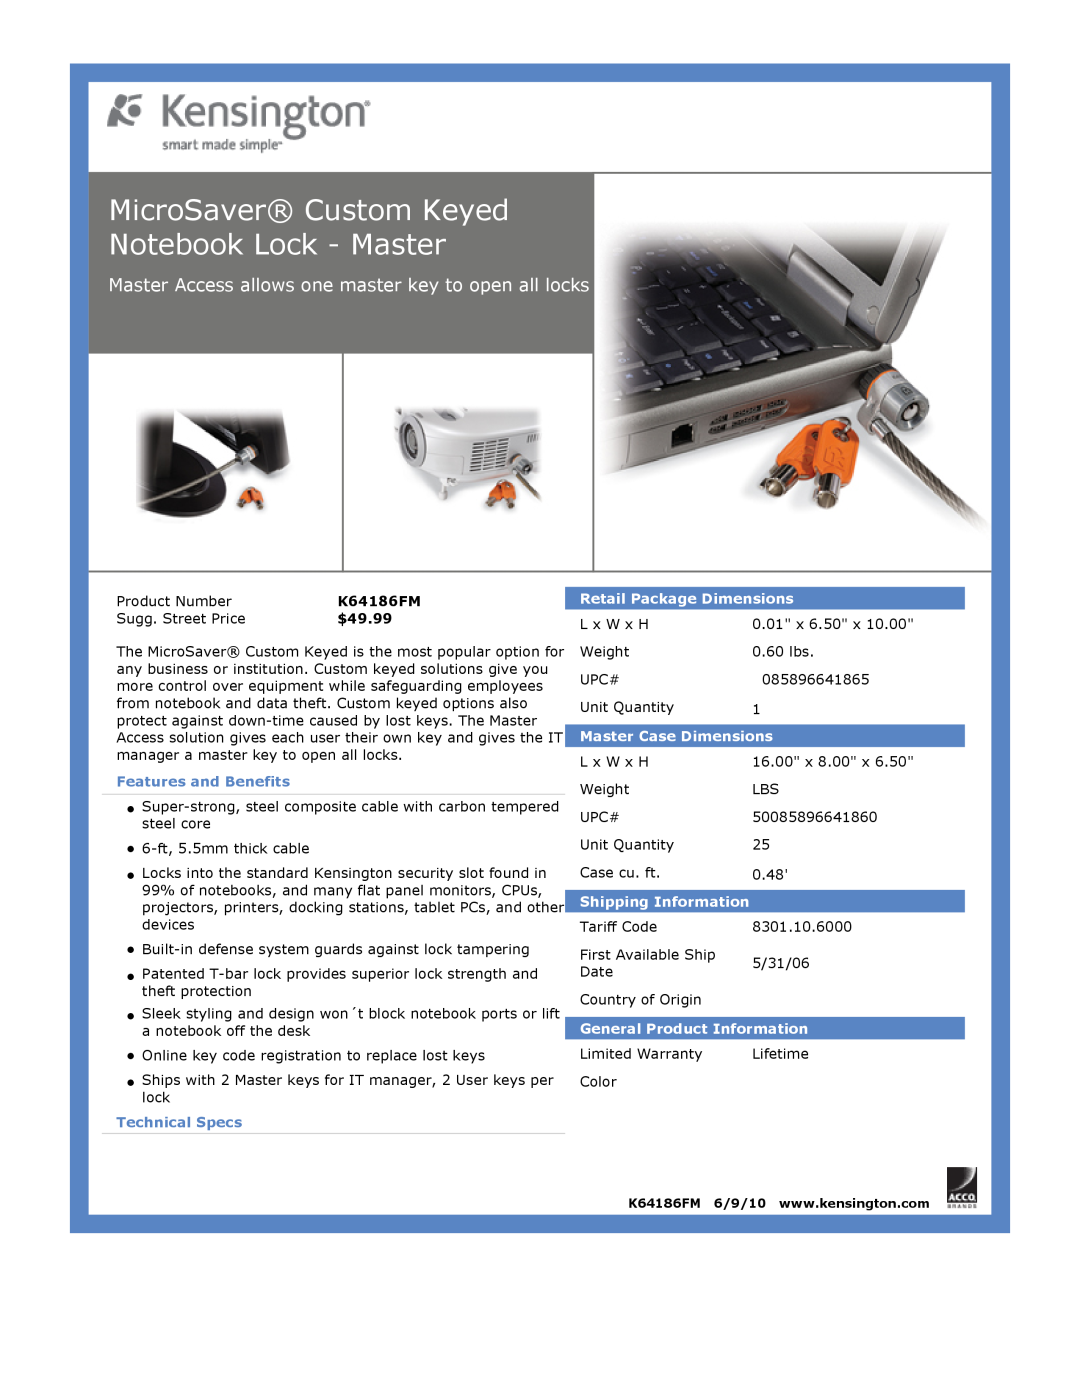 Kensington EU64325 MicroSaver Custom Keyed Notebook Lock - Master, $49.99, Features and Benefits, Technical Specs 